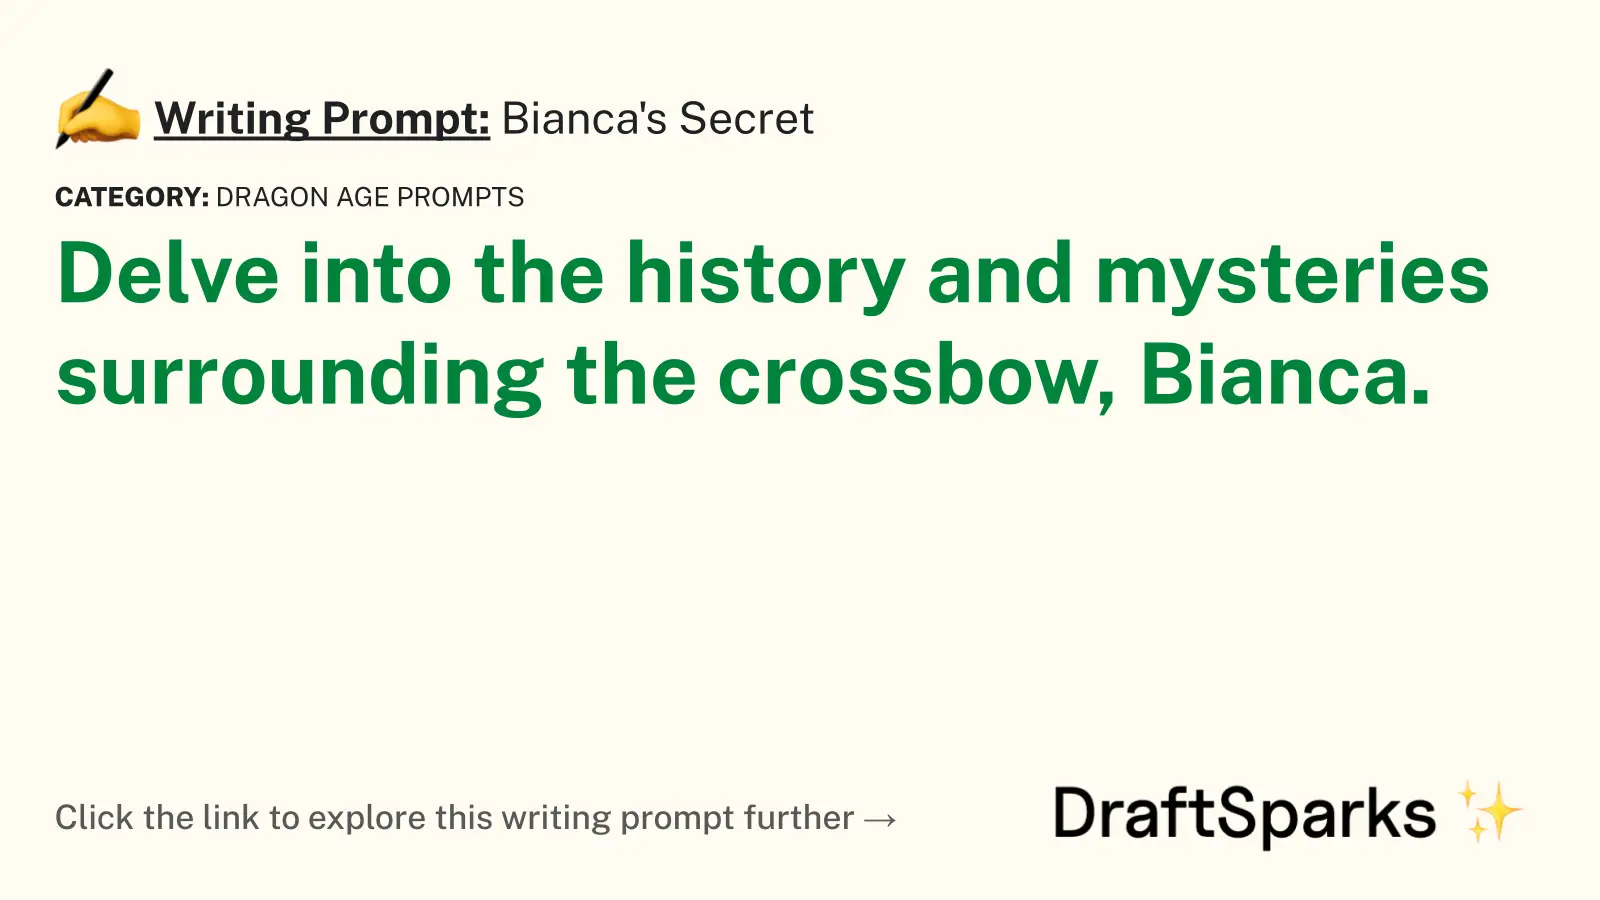 Bianca’s Secret